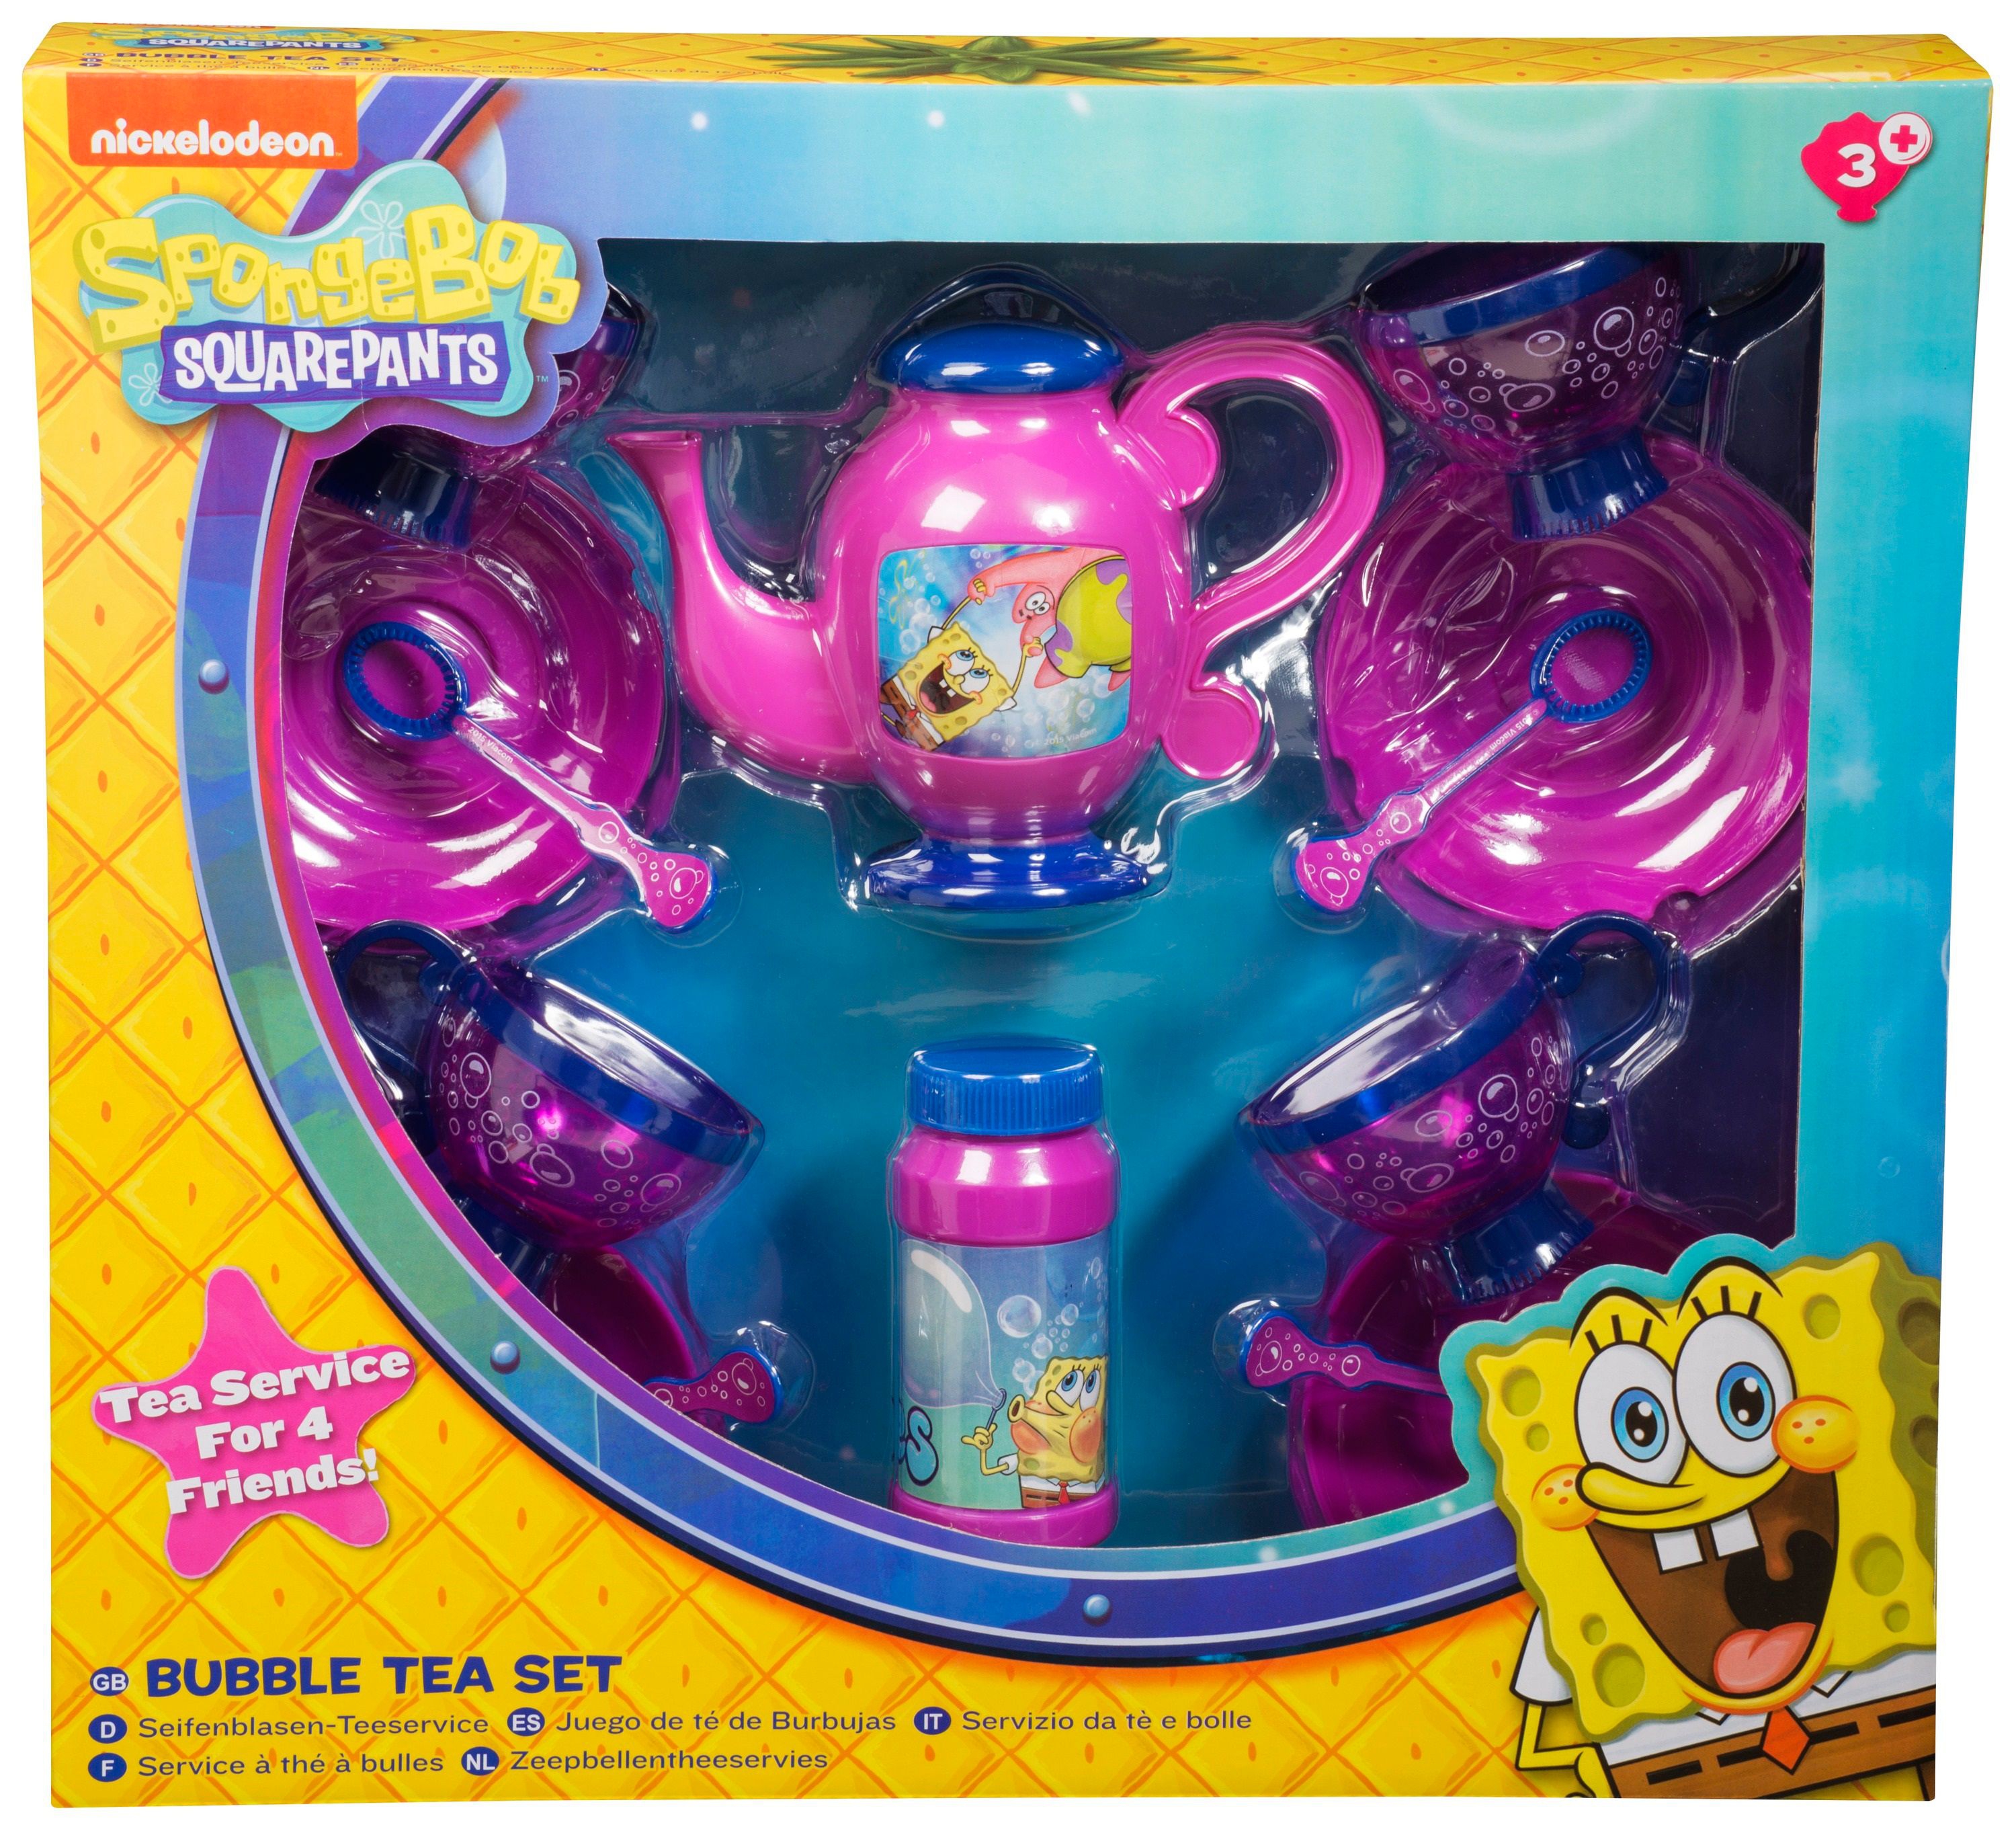 Spongebob Squarepants 'Bubble Tea Set' Playset 14 Piece Toy